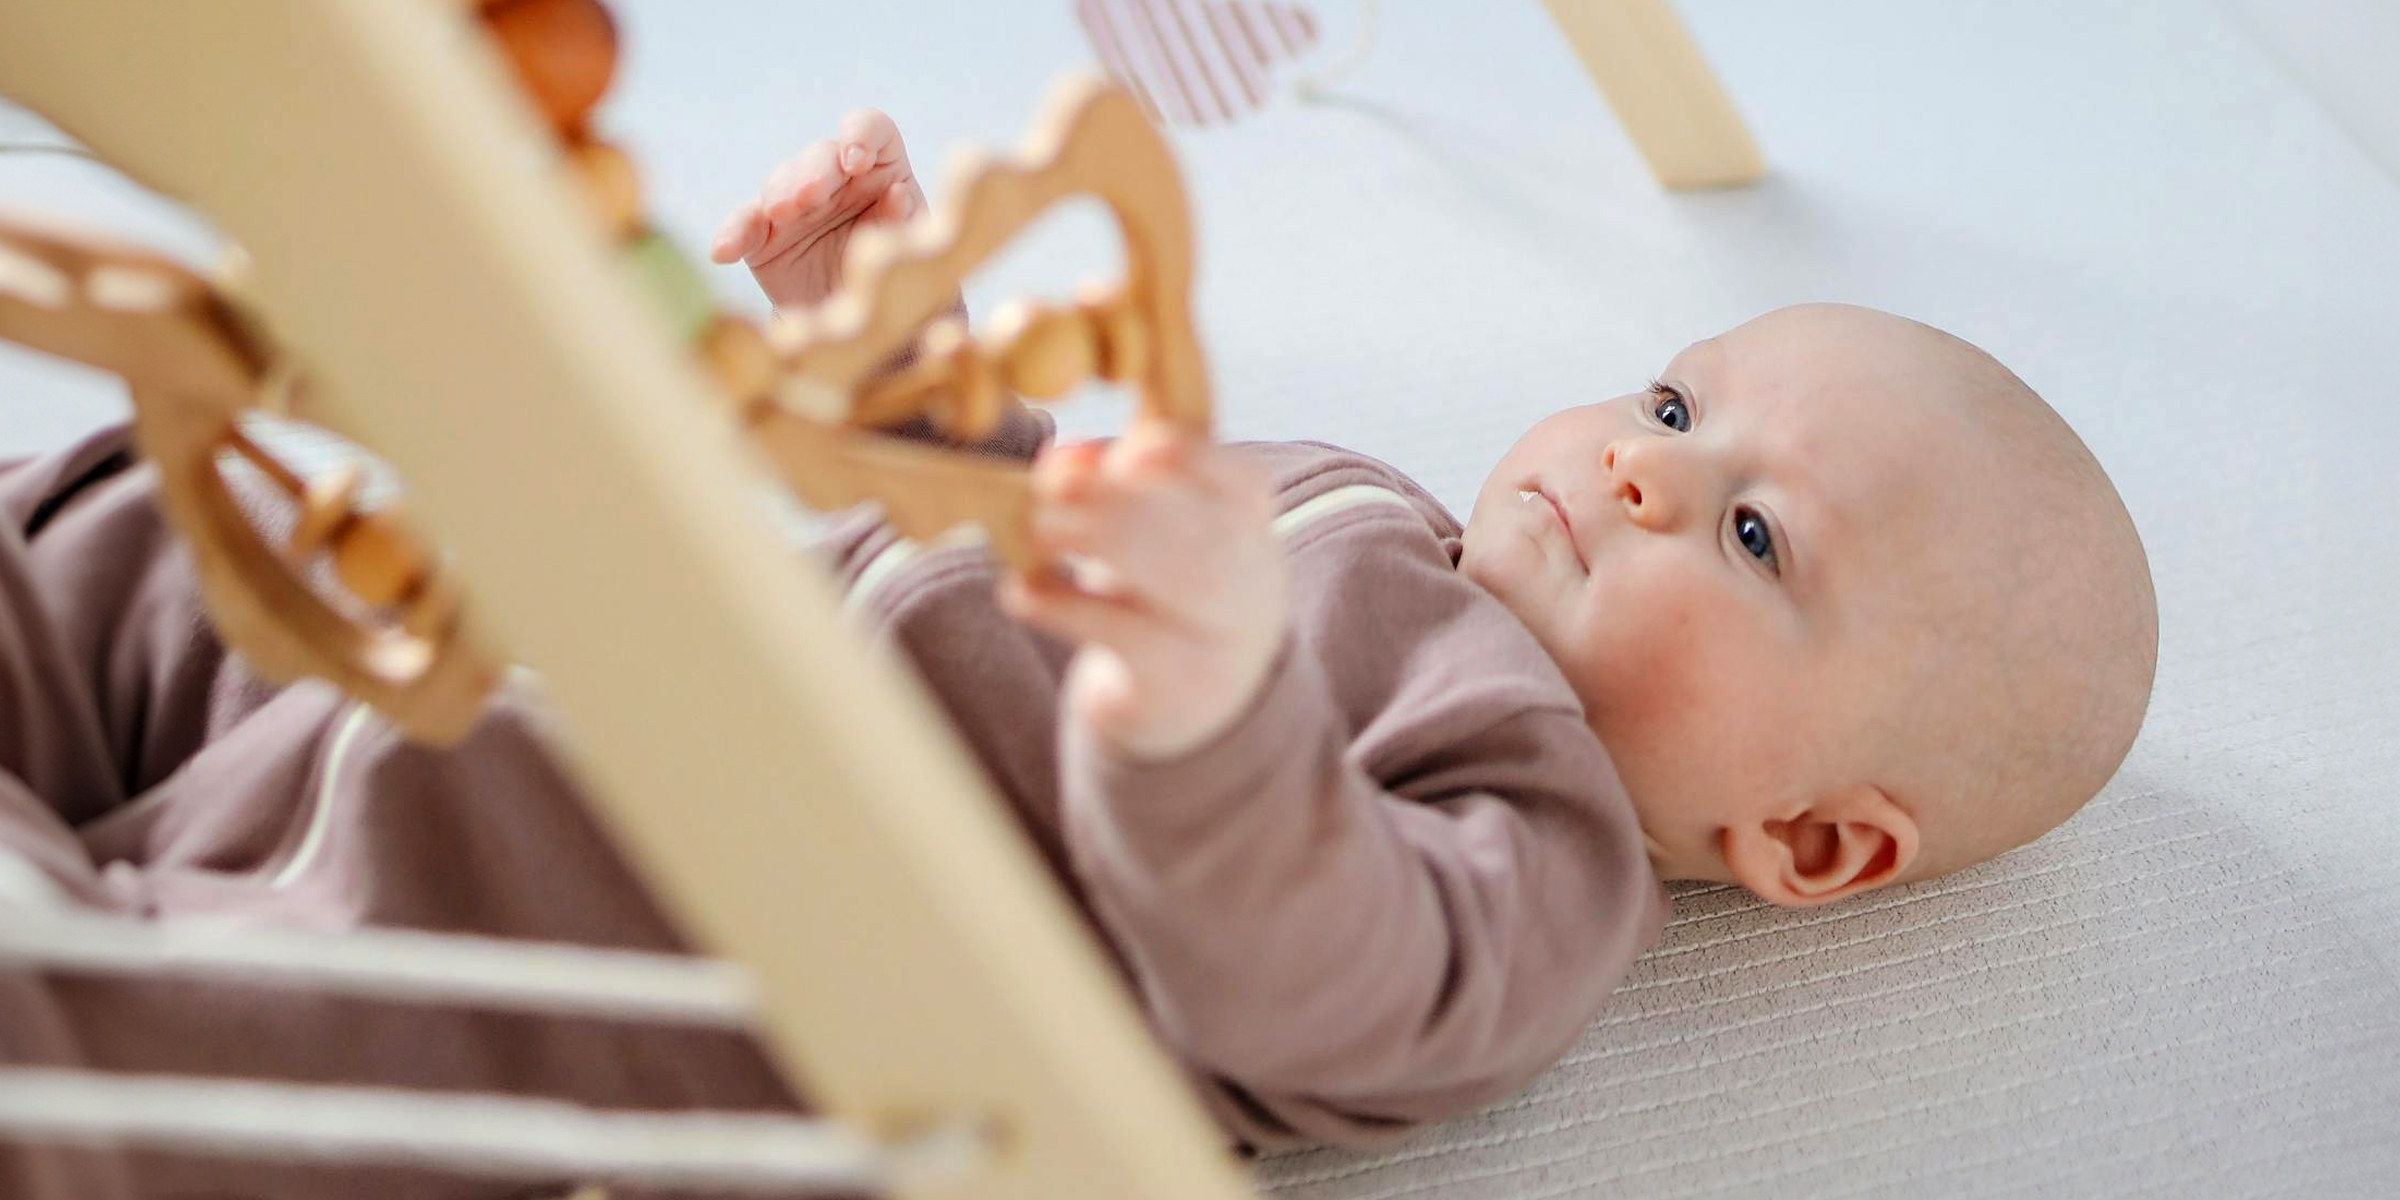 A baby | Source: Pexels/polina-tankilevitch